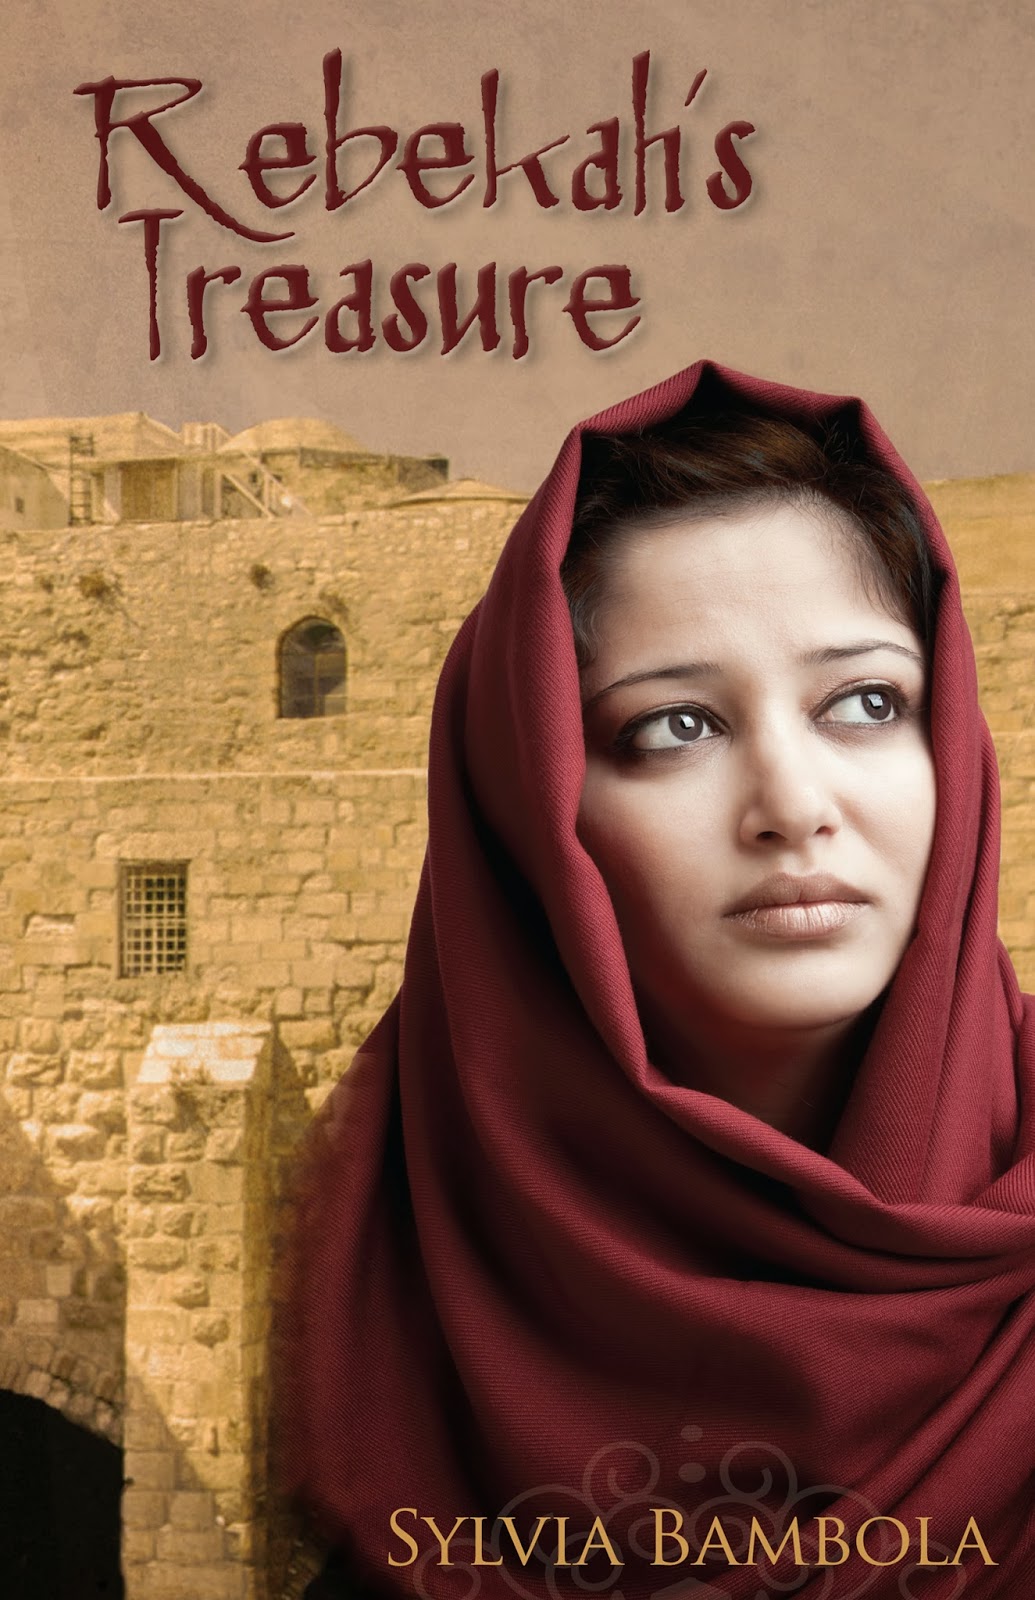 COTT: Rebekah’s Treasure by Sylvia Bambola